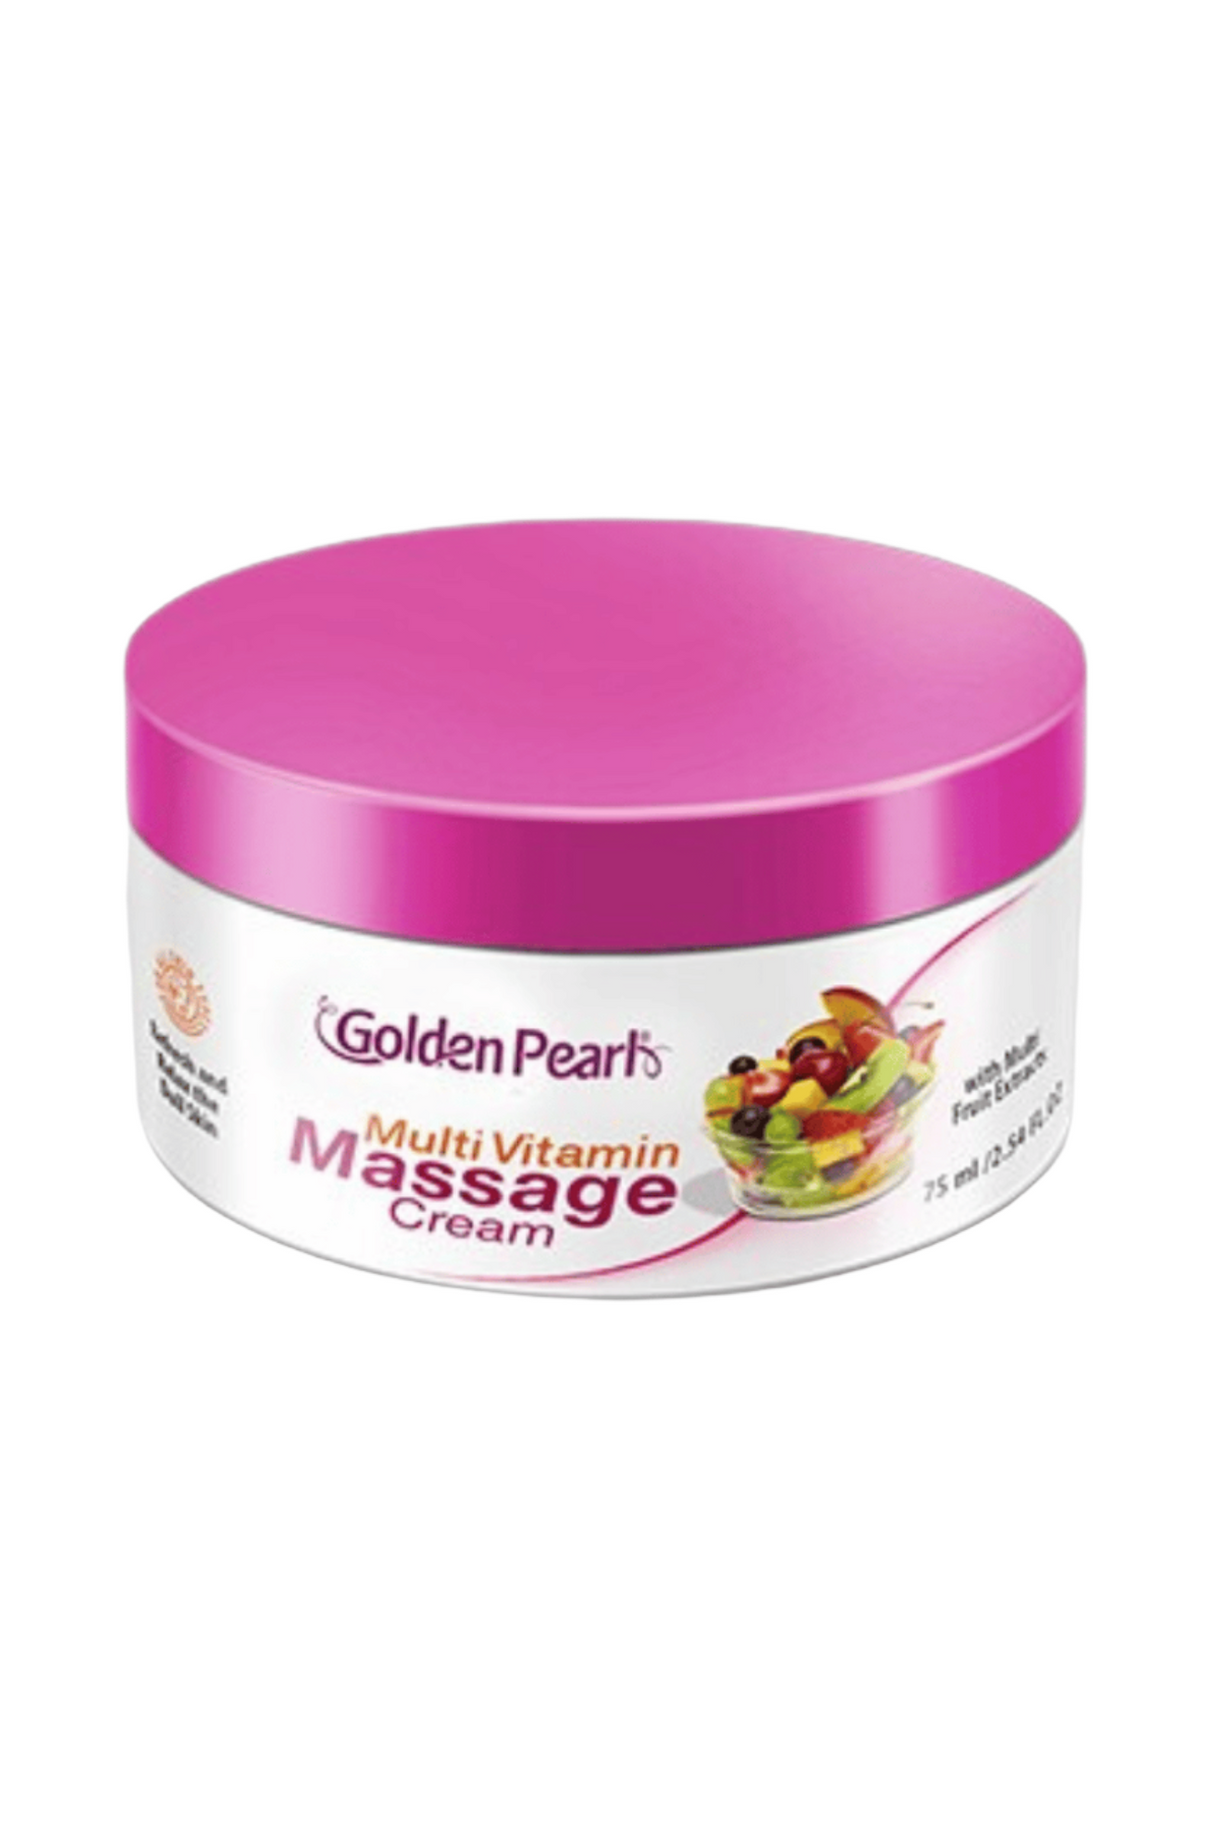 golden pearl massage cream multivitamin 75ml